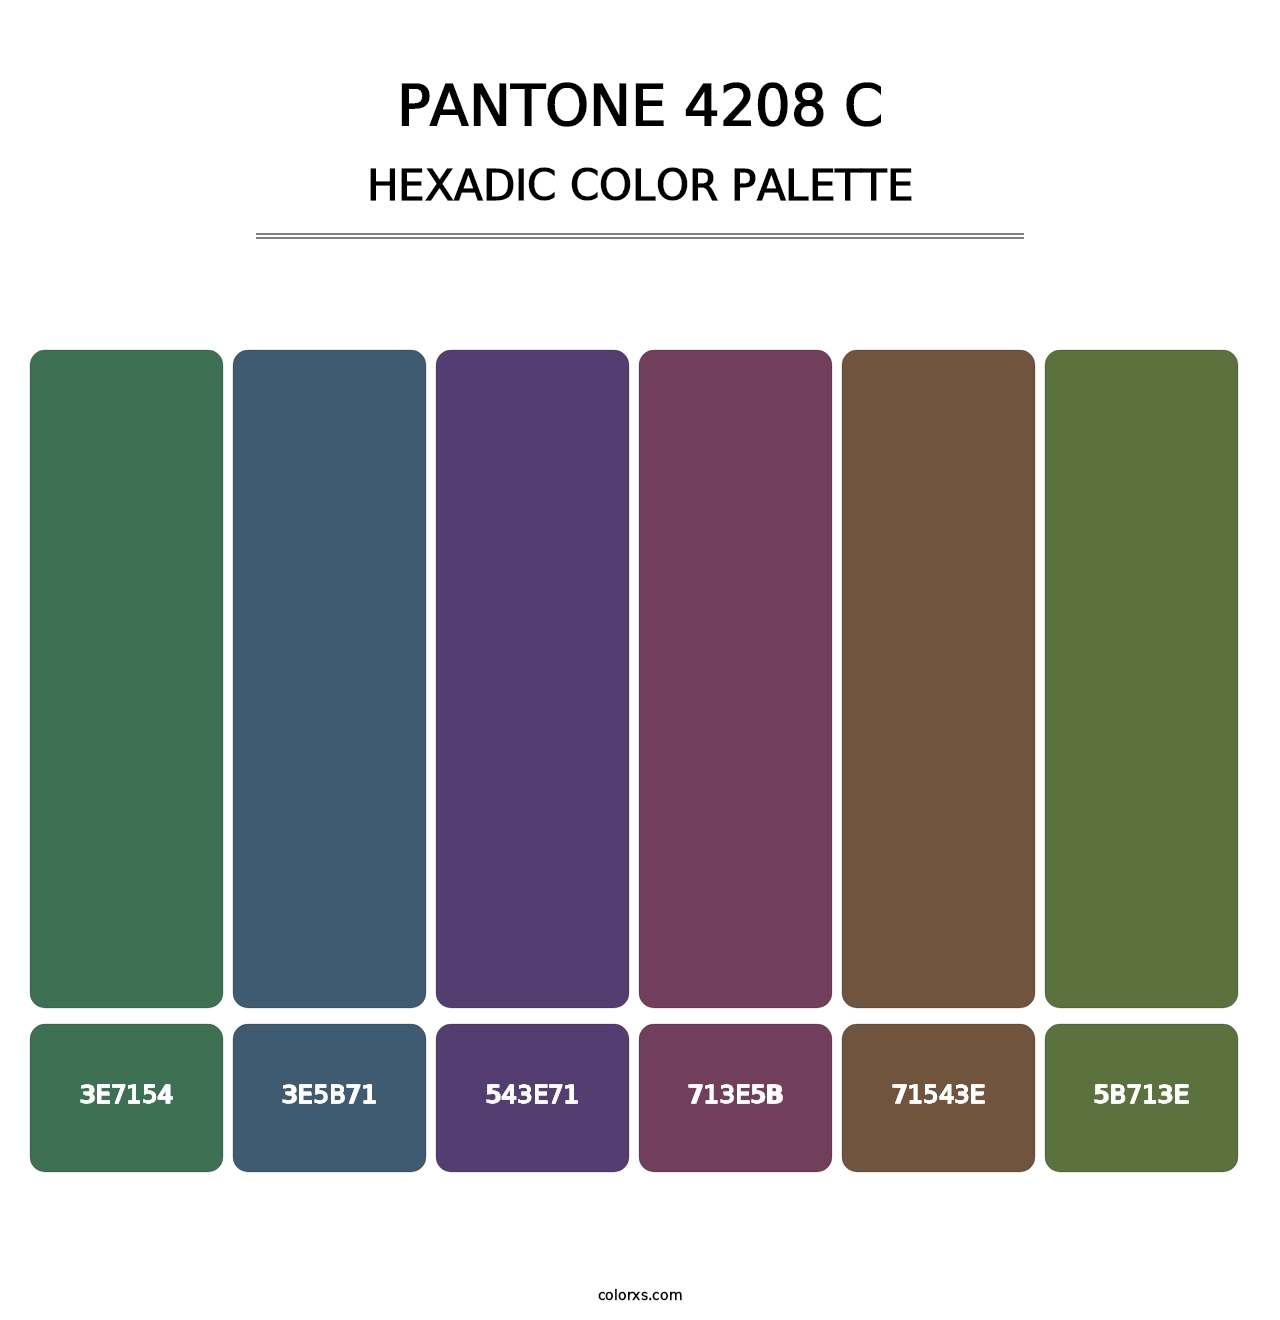 PANTONE 4208 C - Hexadic Color Palette